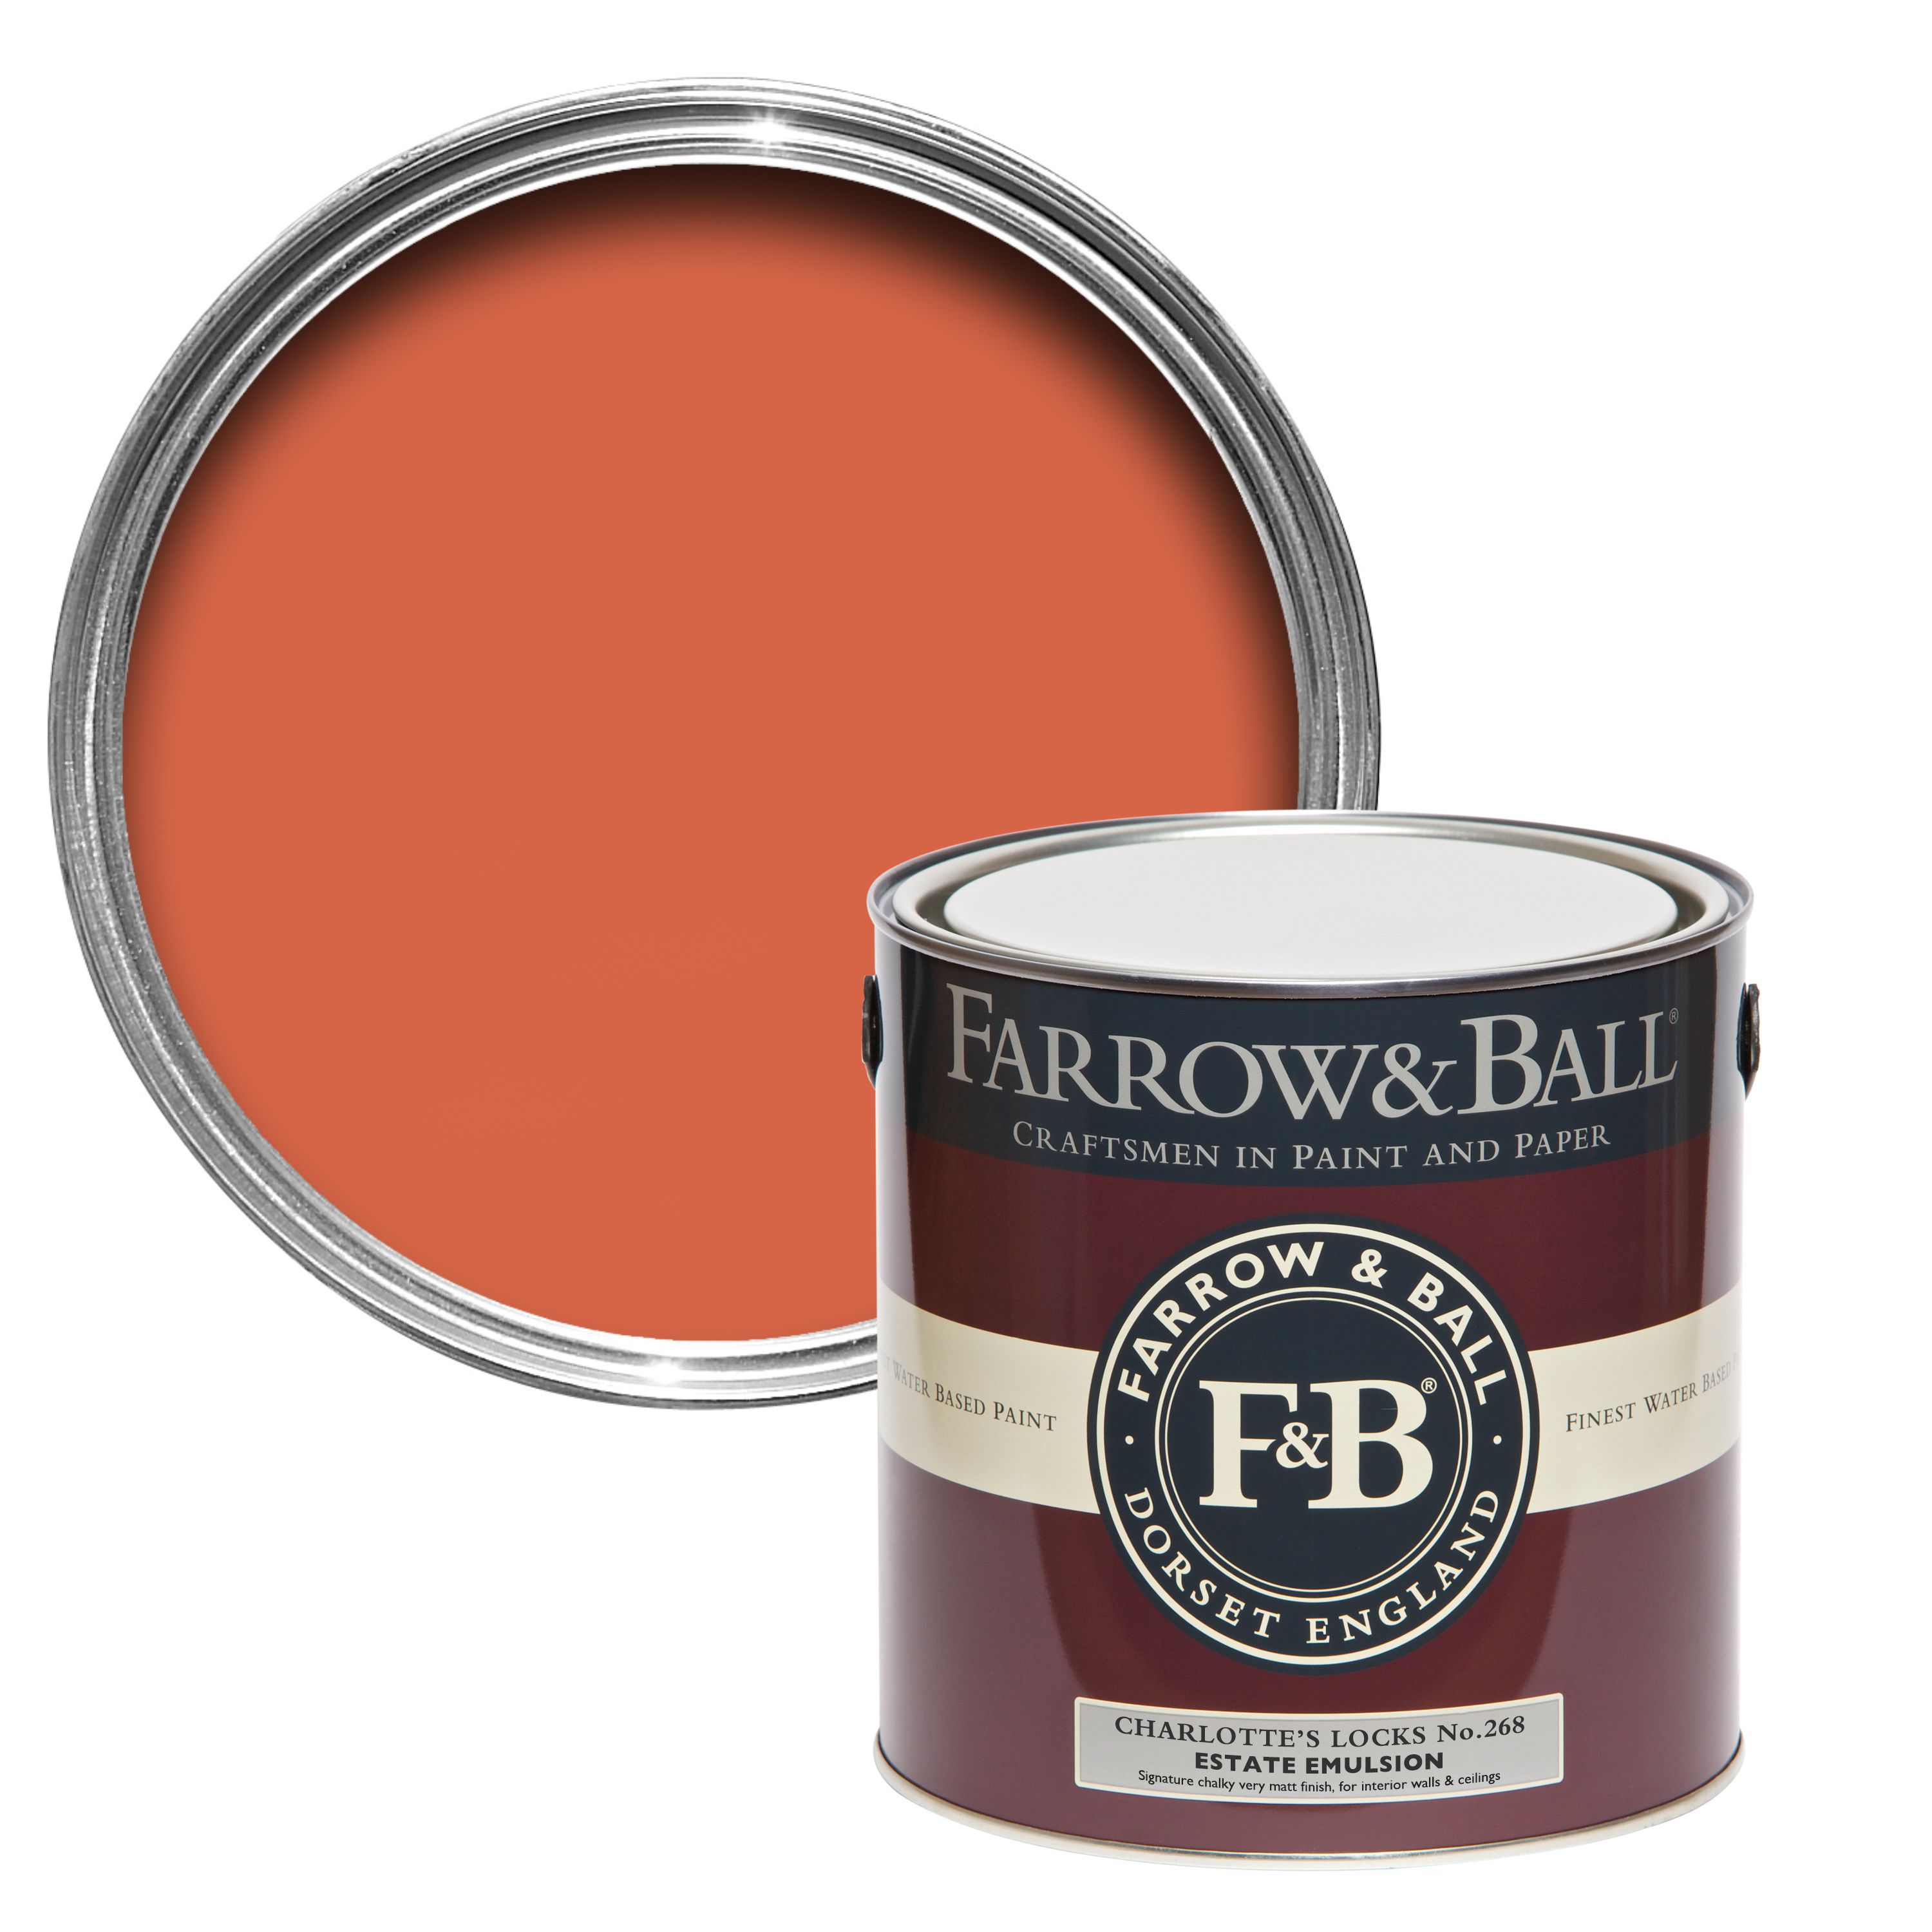 Farrow & Ball Estate Charlotte's locks No.268 Matt Emulsion paint, 2.5L Tester pot